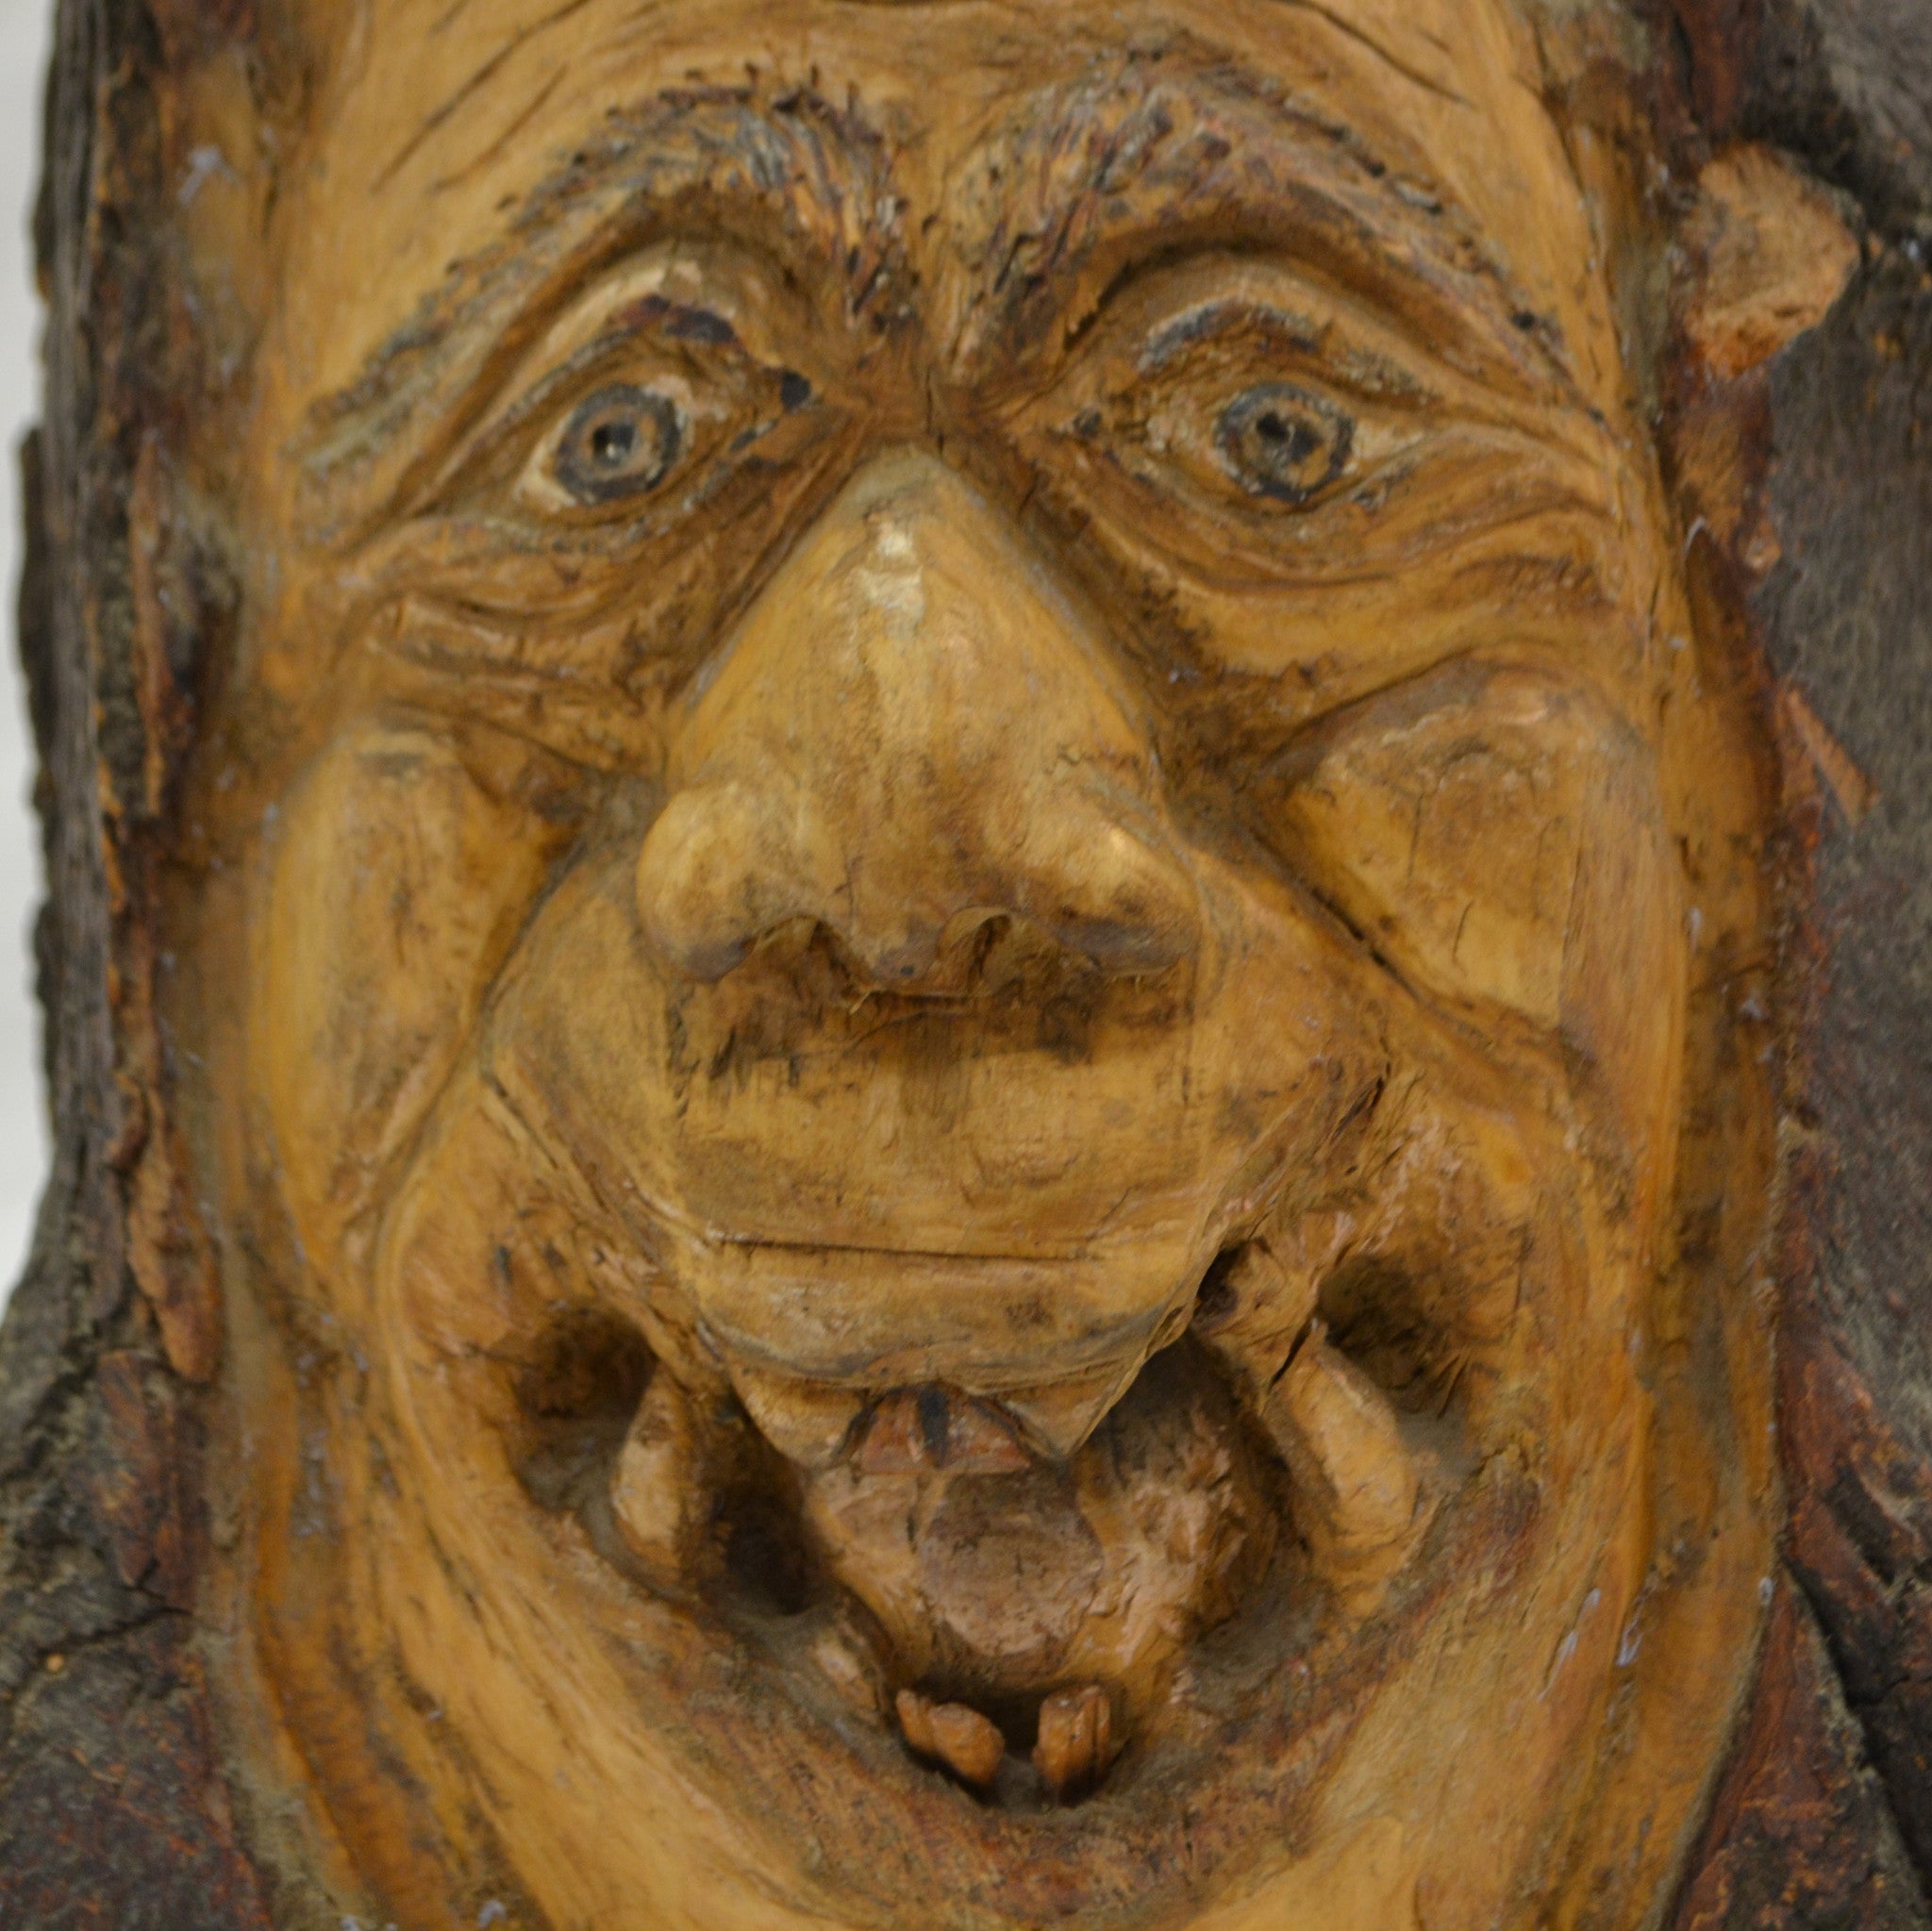 Stump man face folk art carving